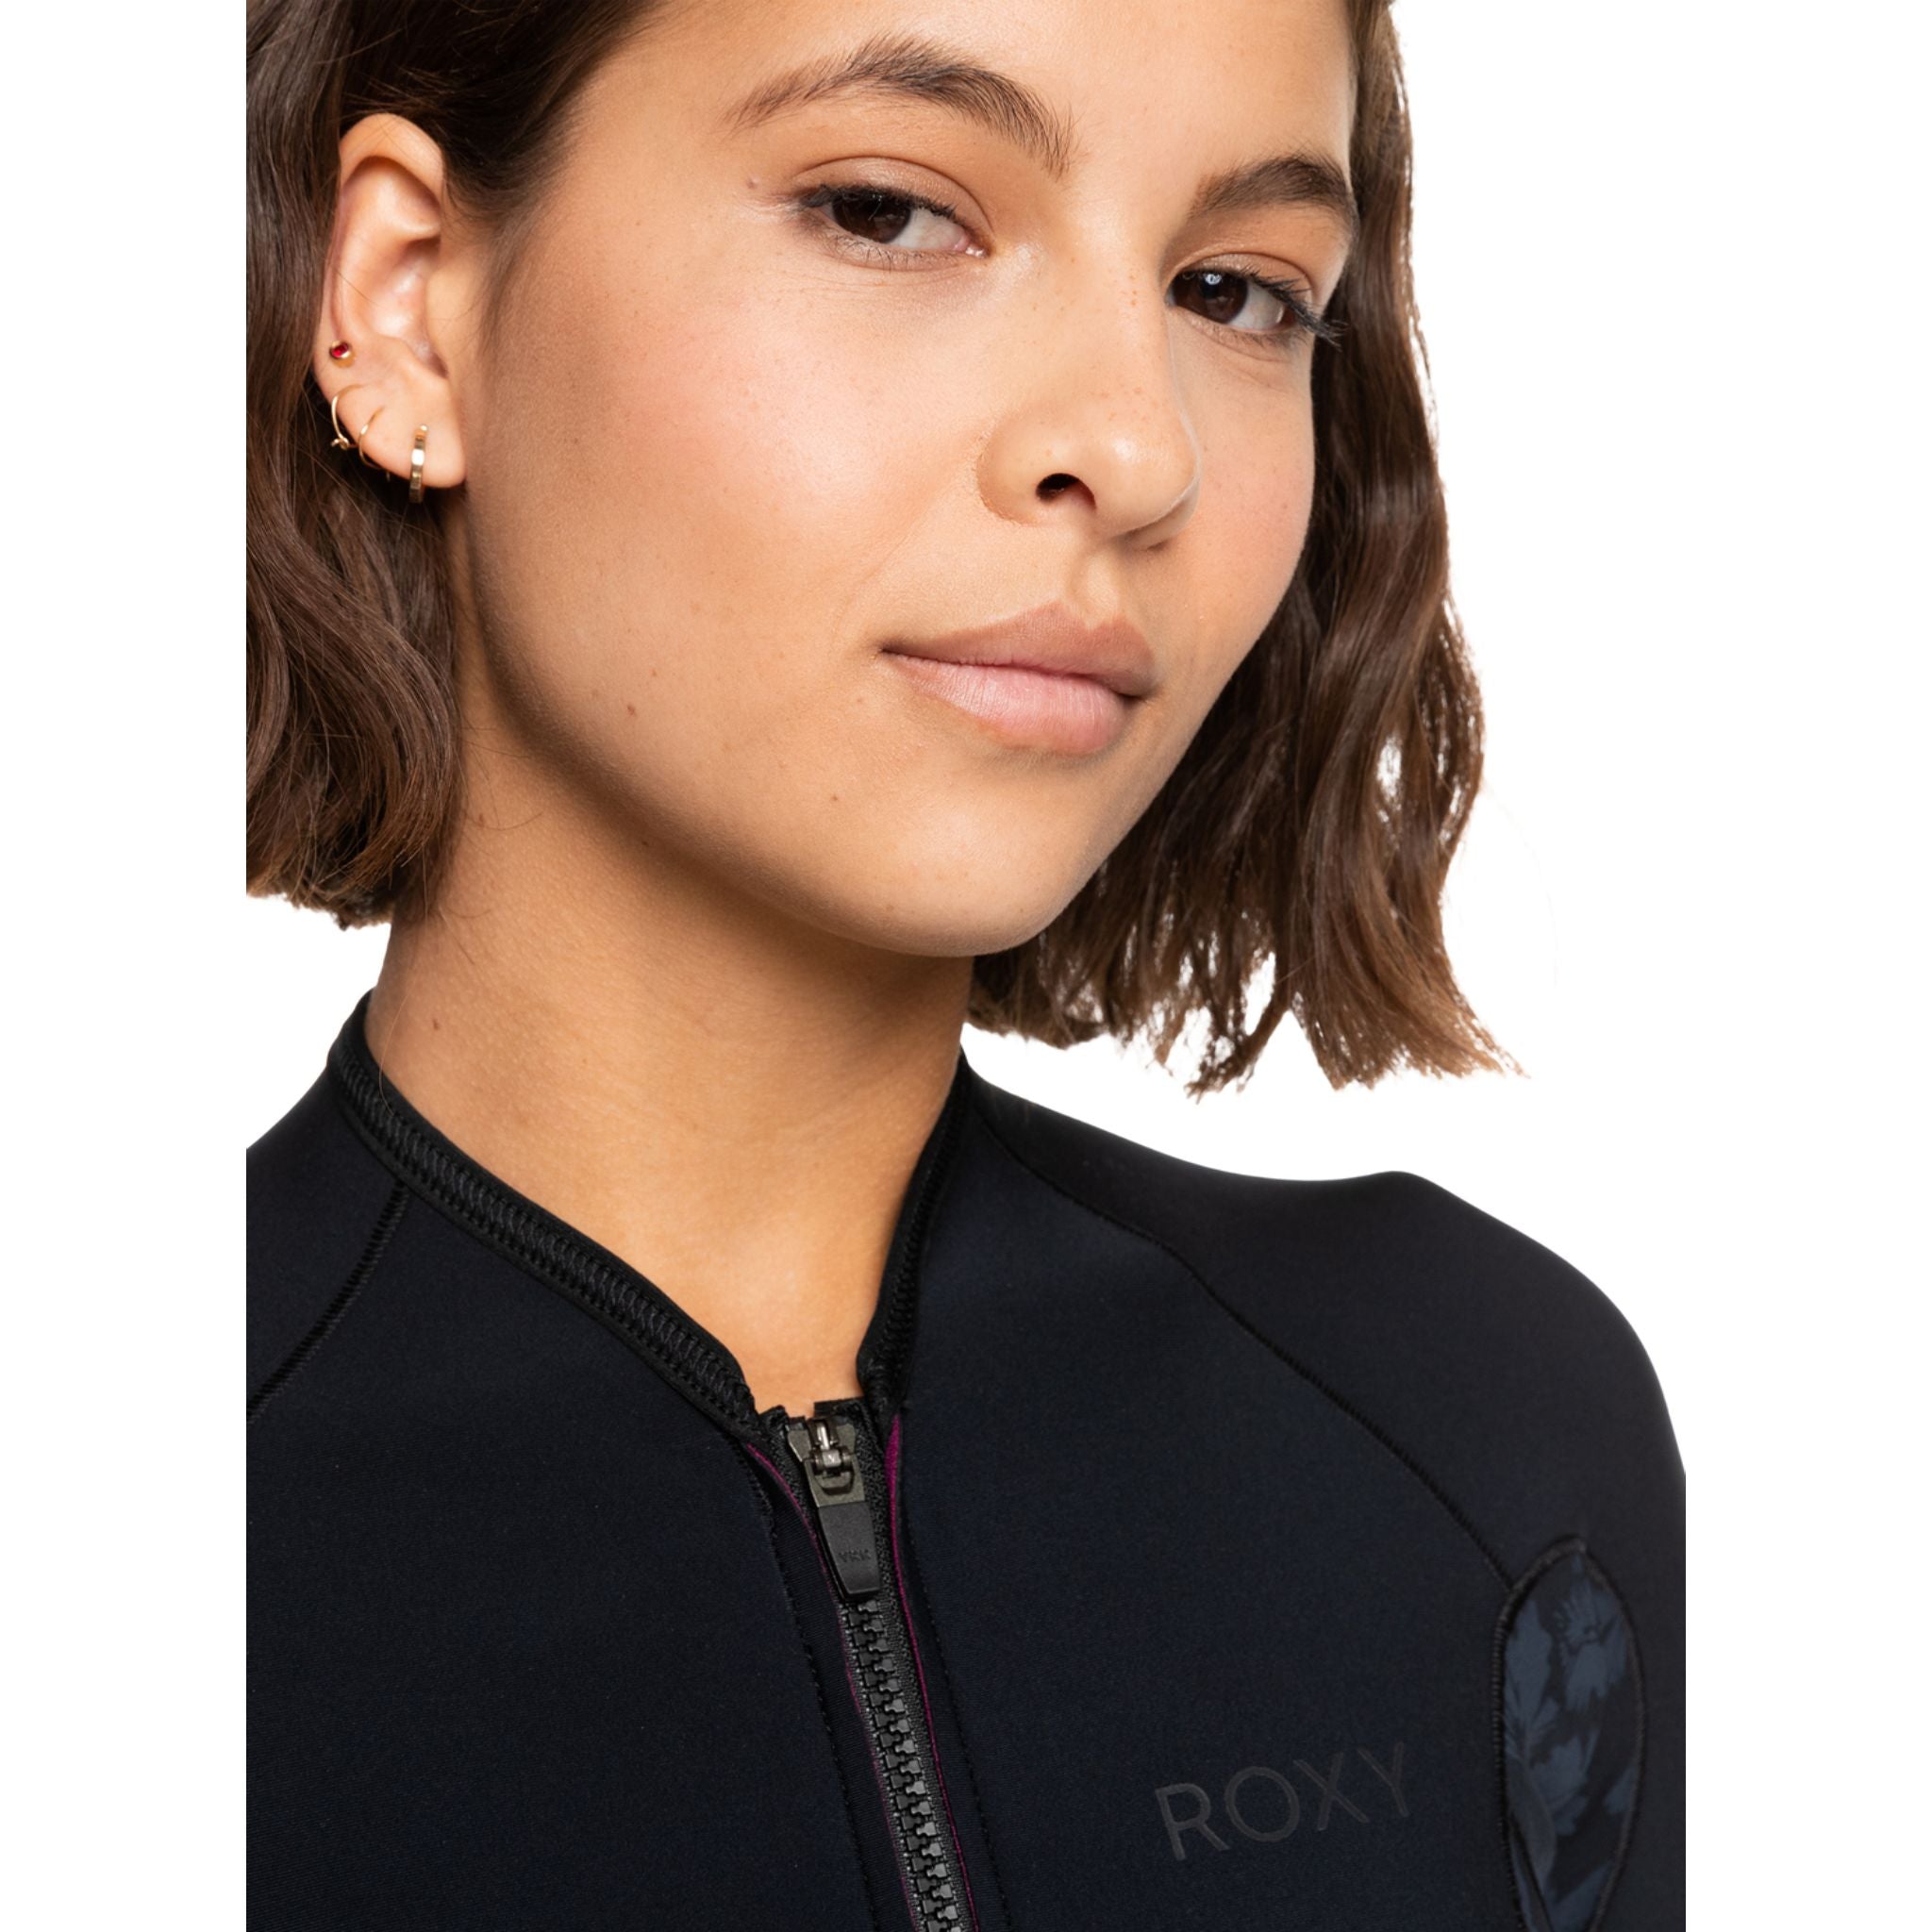 Roxy Swell Series 1mm Zip Wetsuit Jacket 